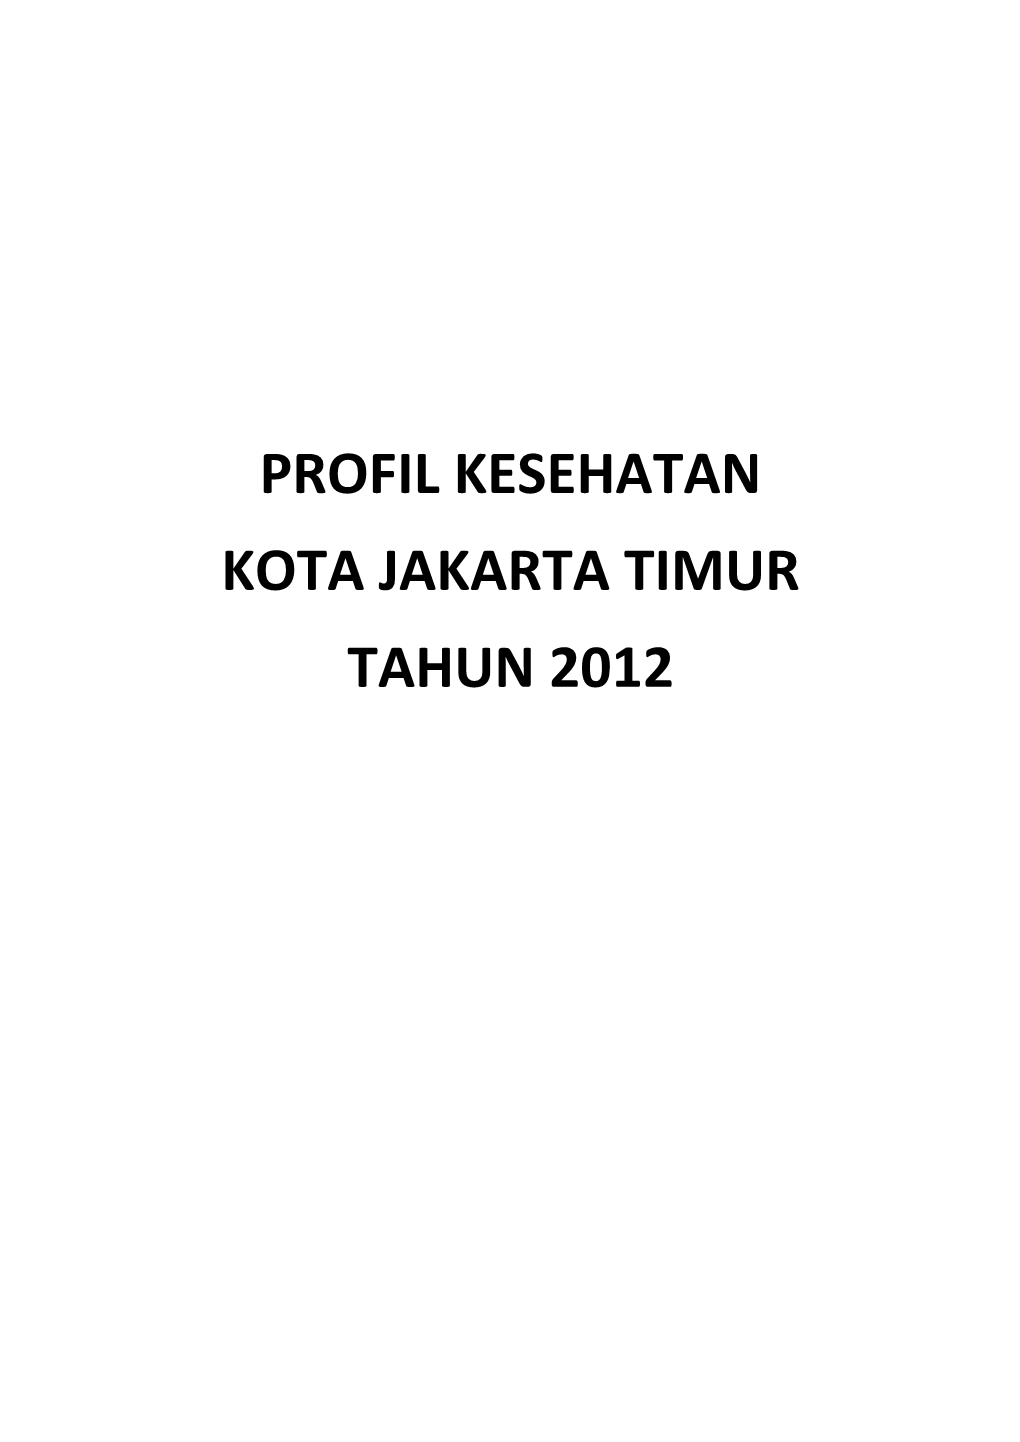 Profil Kesehatan Kota Jakarta Timur Tahun 2012